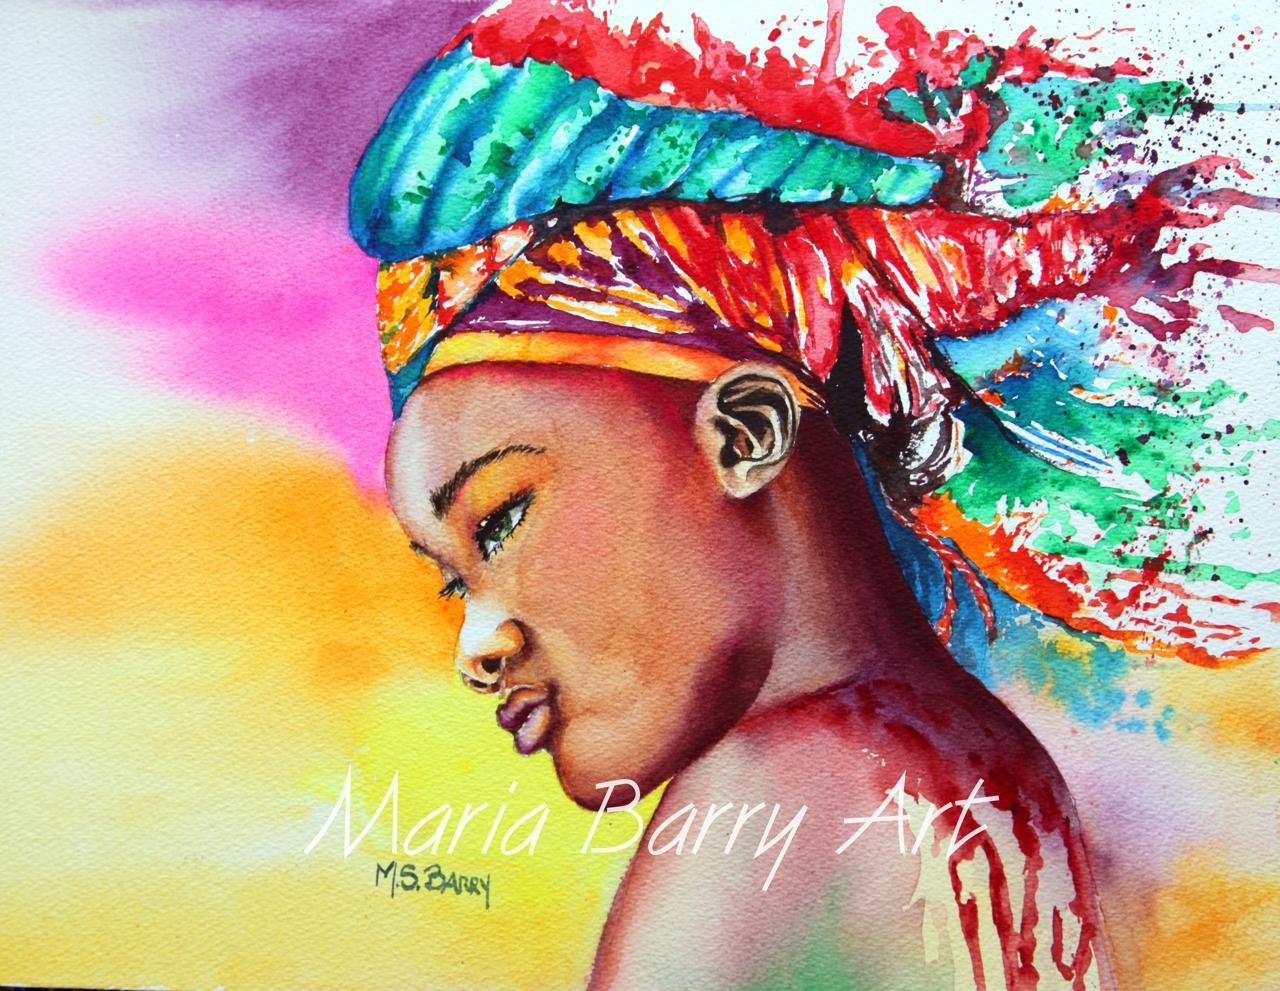 #Kenya #Prints #Watercolour #Art #Africa #Watercolor #MariaBarryArt http://tinyurl.com/m76ayuq http://t.co/n0AQEPdts4